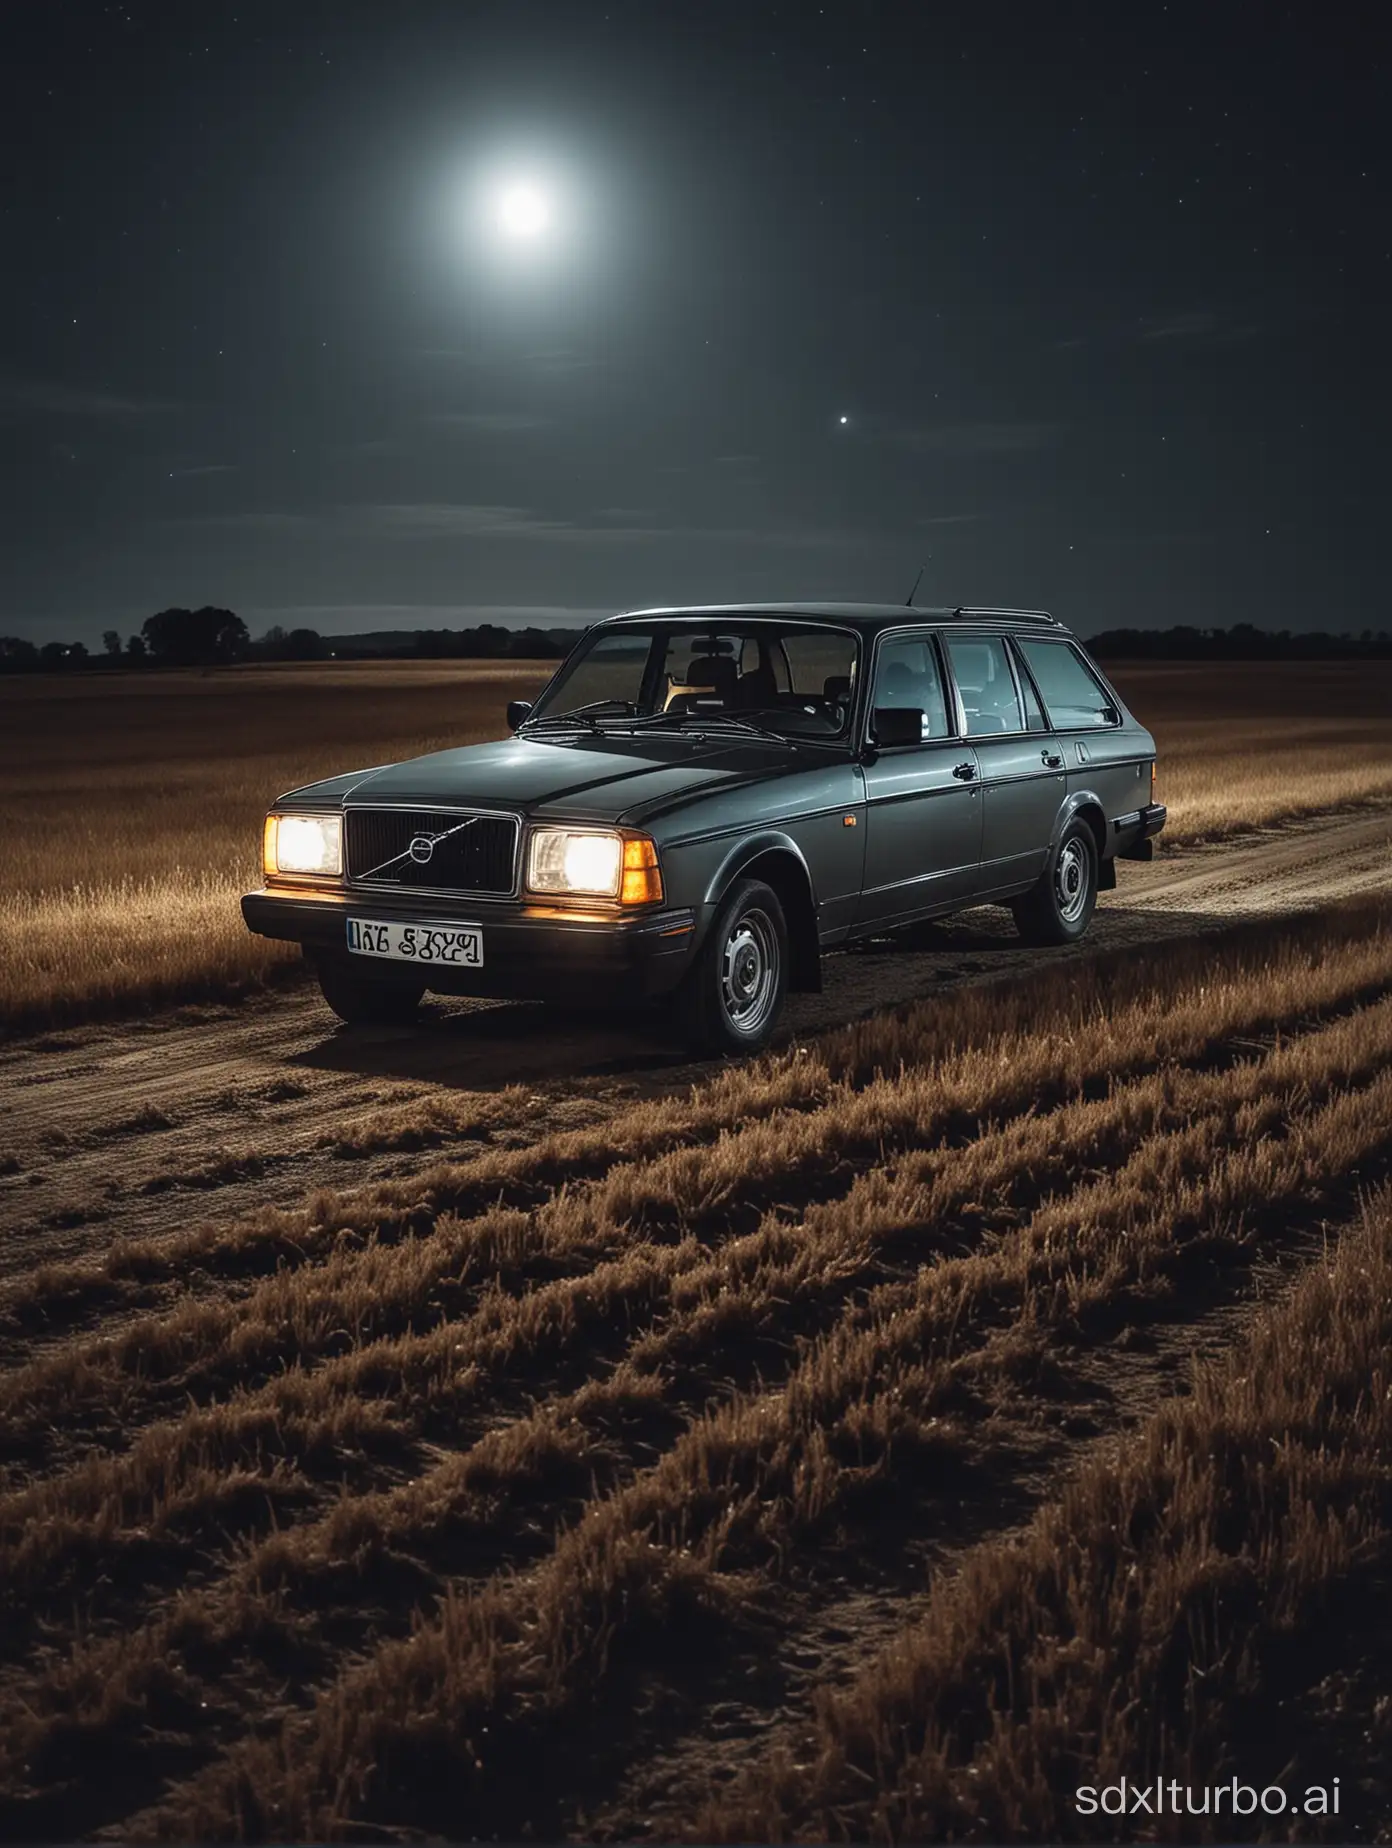 Volvo 242 in the field night moon light